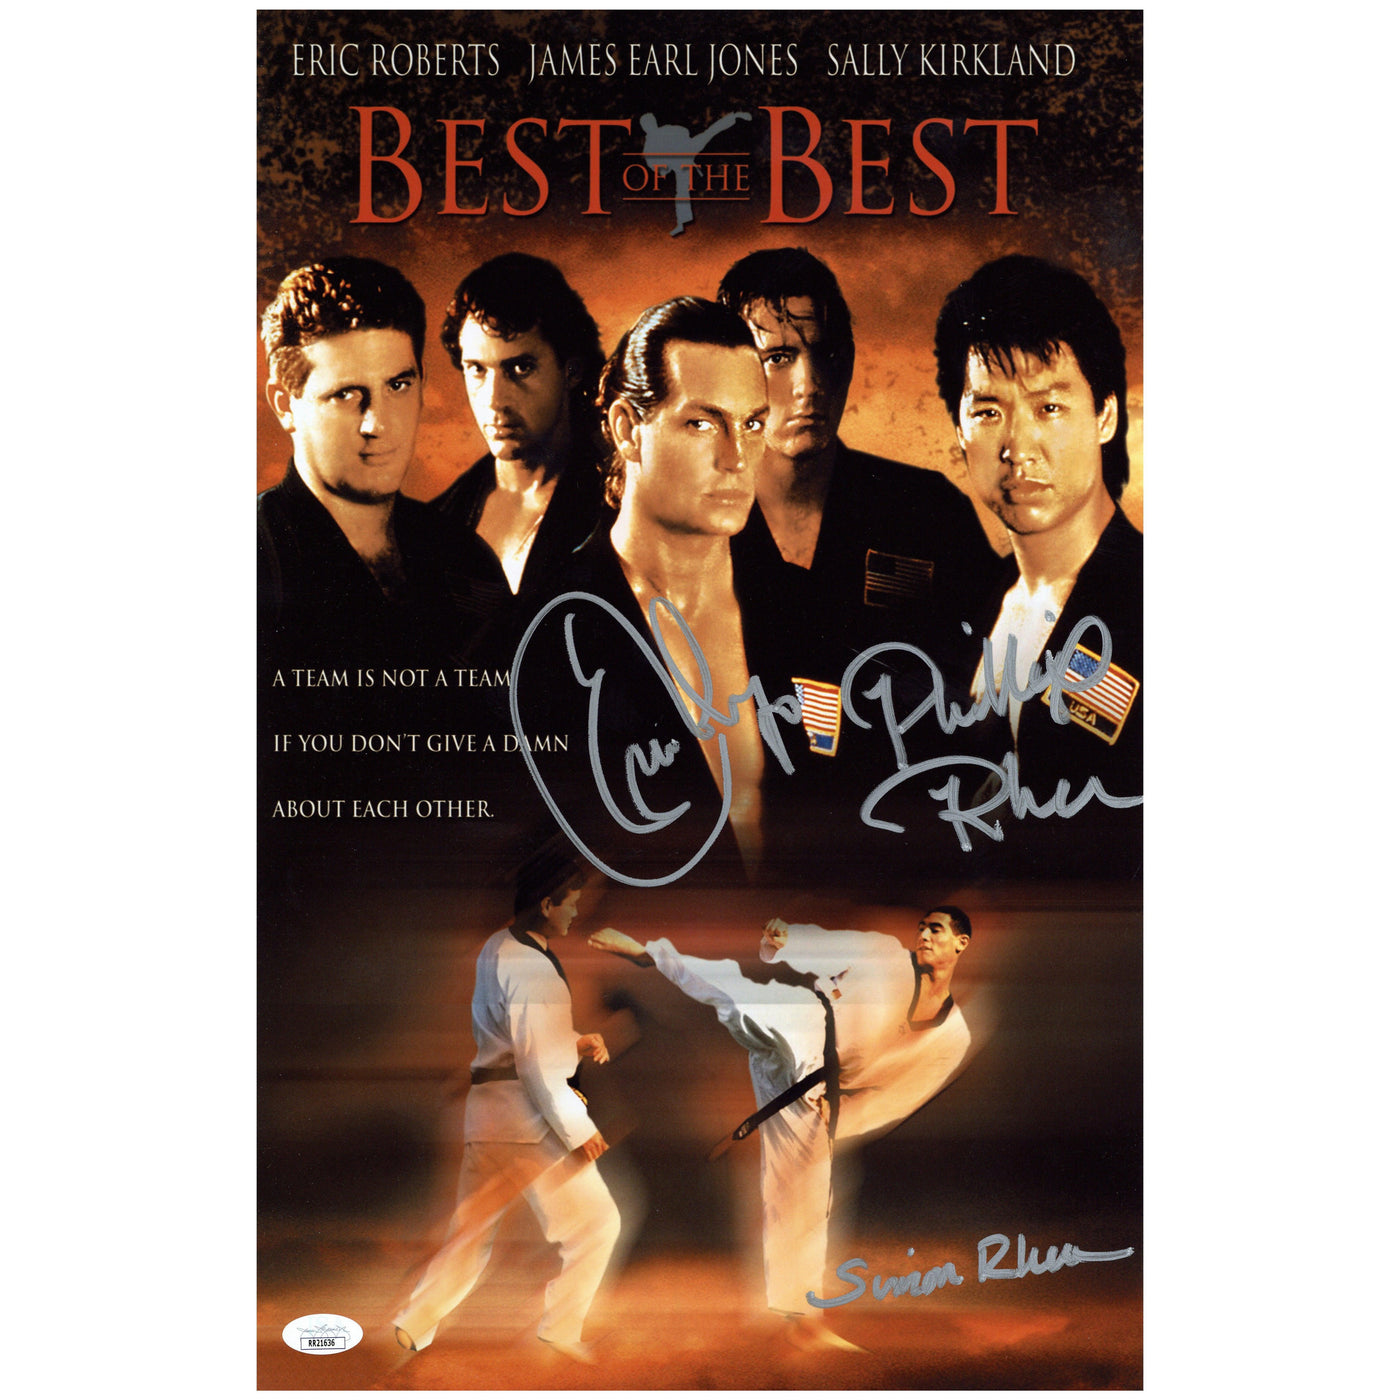 Eric Roberts Signed Best of the Best 11x17 Photo Phillip & Simon Rhee Autographed JSA